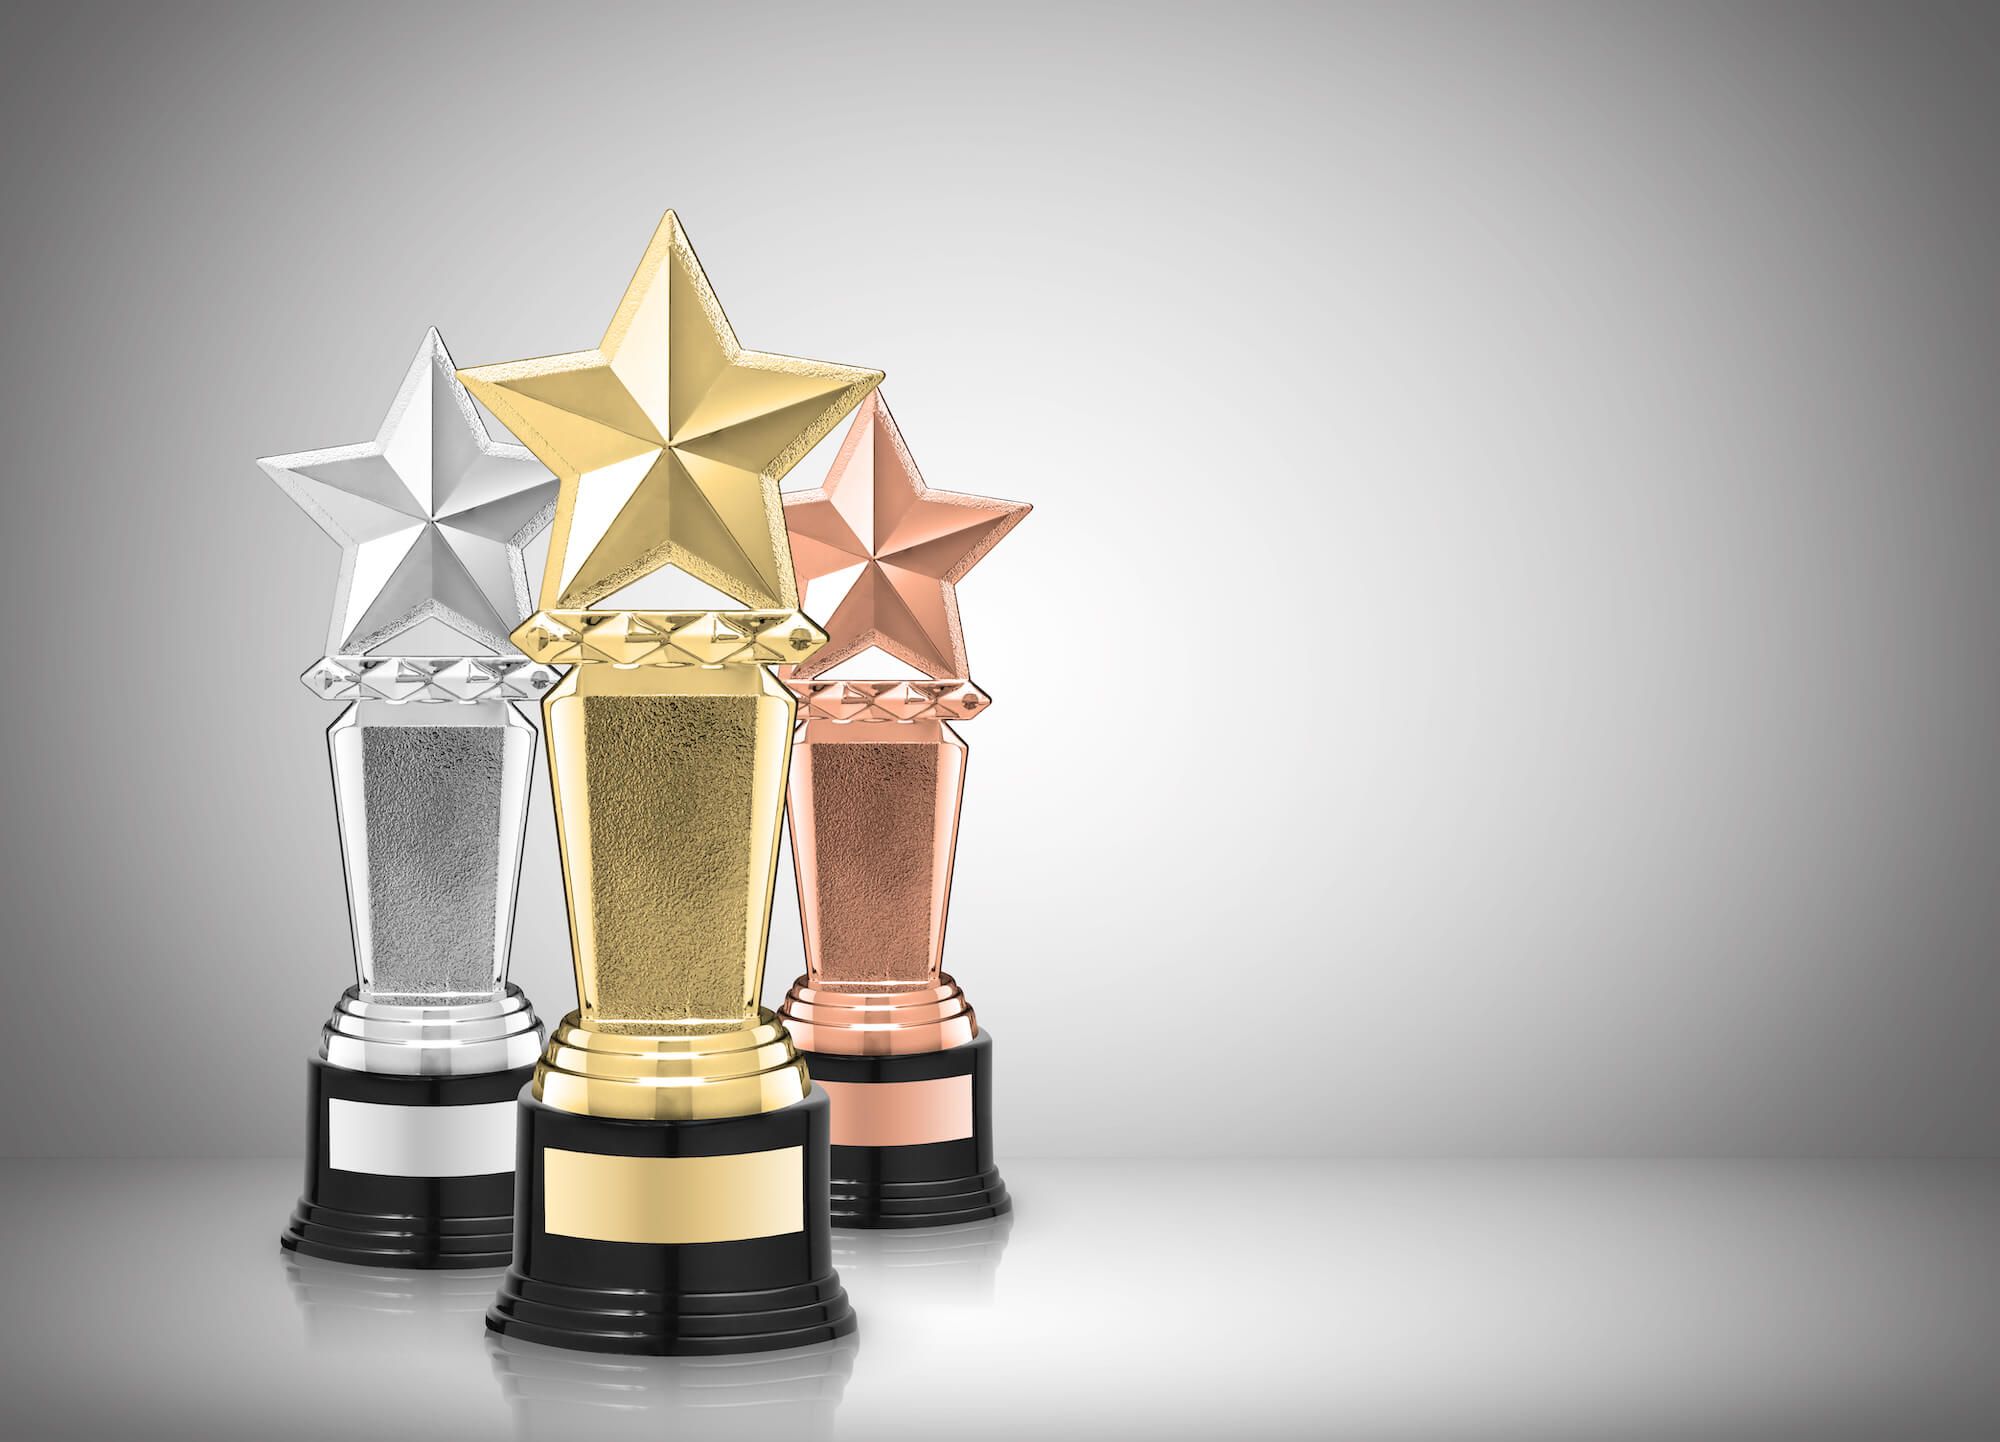 Sitetracker win awards - company culture